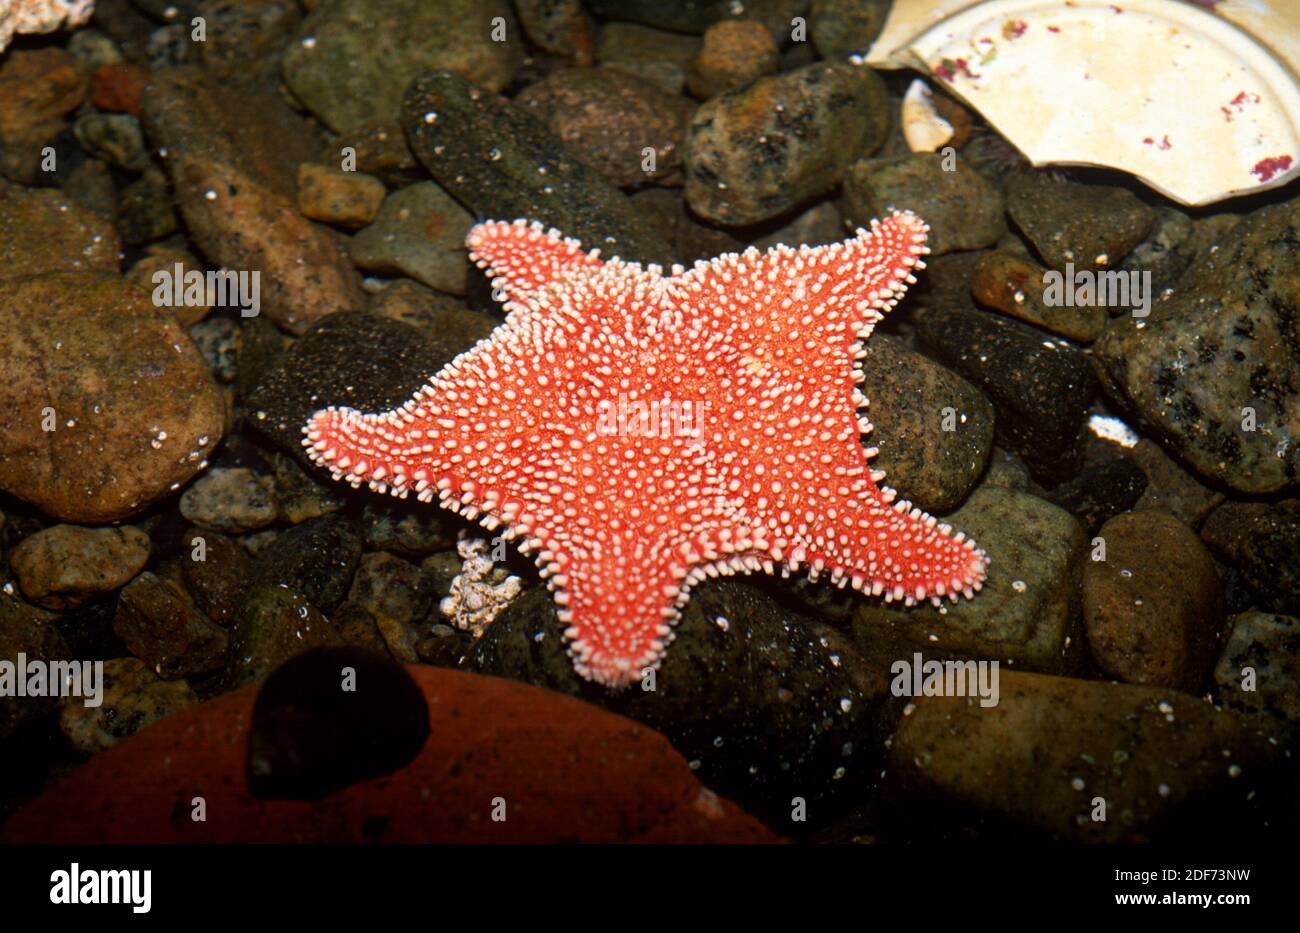 Hippasteria phrygiana is a cosmopolitan starfish that feeds of polyps. Stock Photo